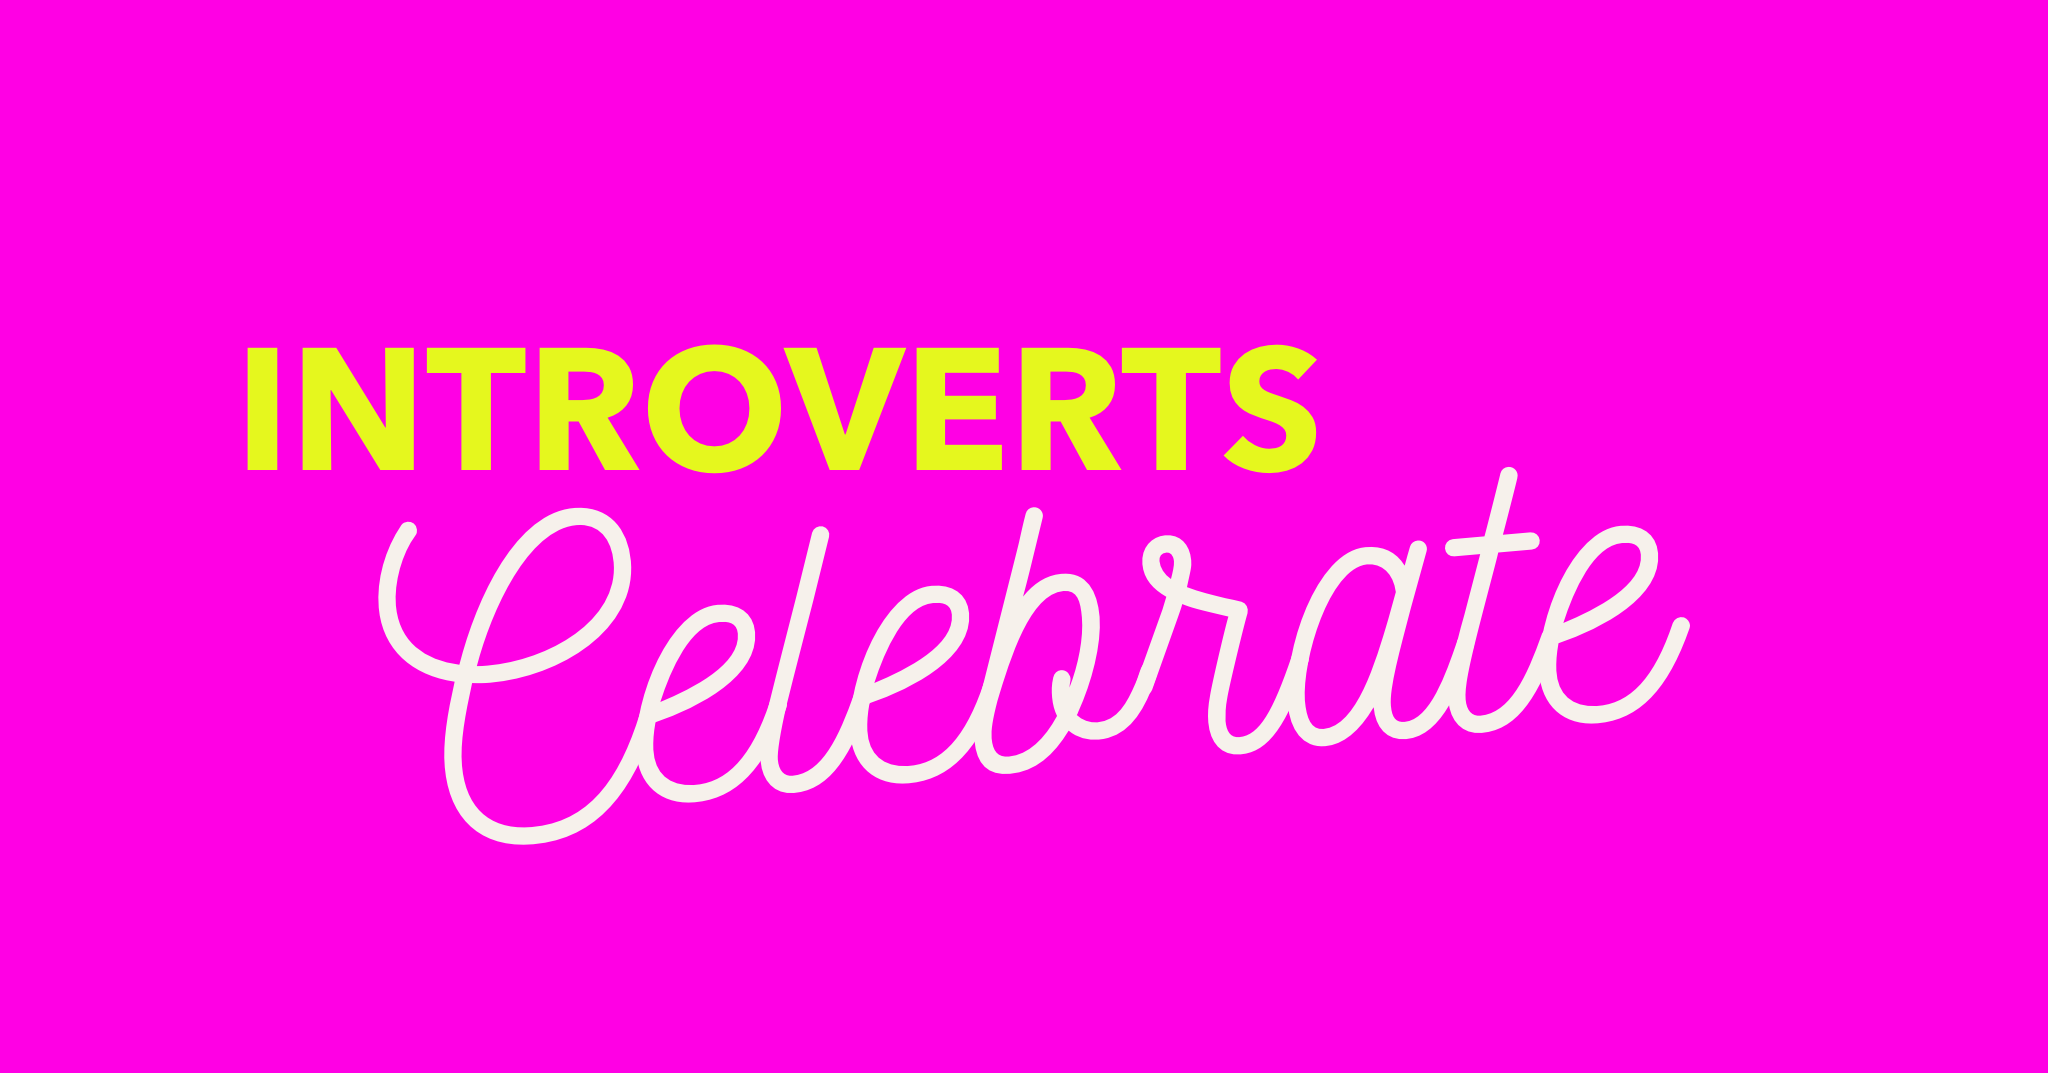 Introverts Celebrate